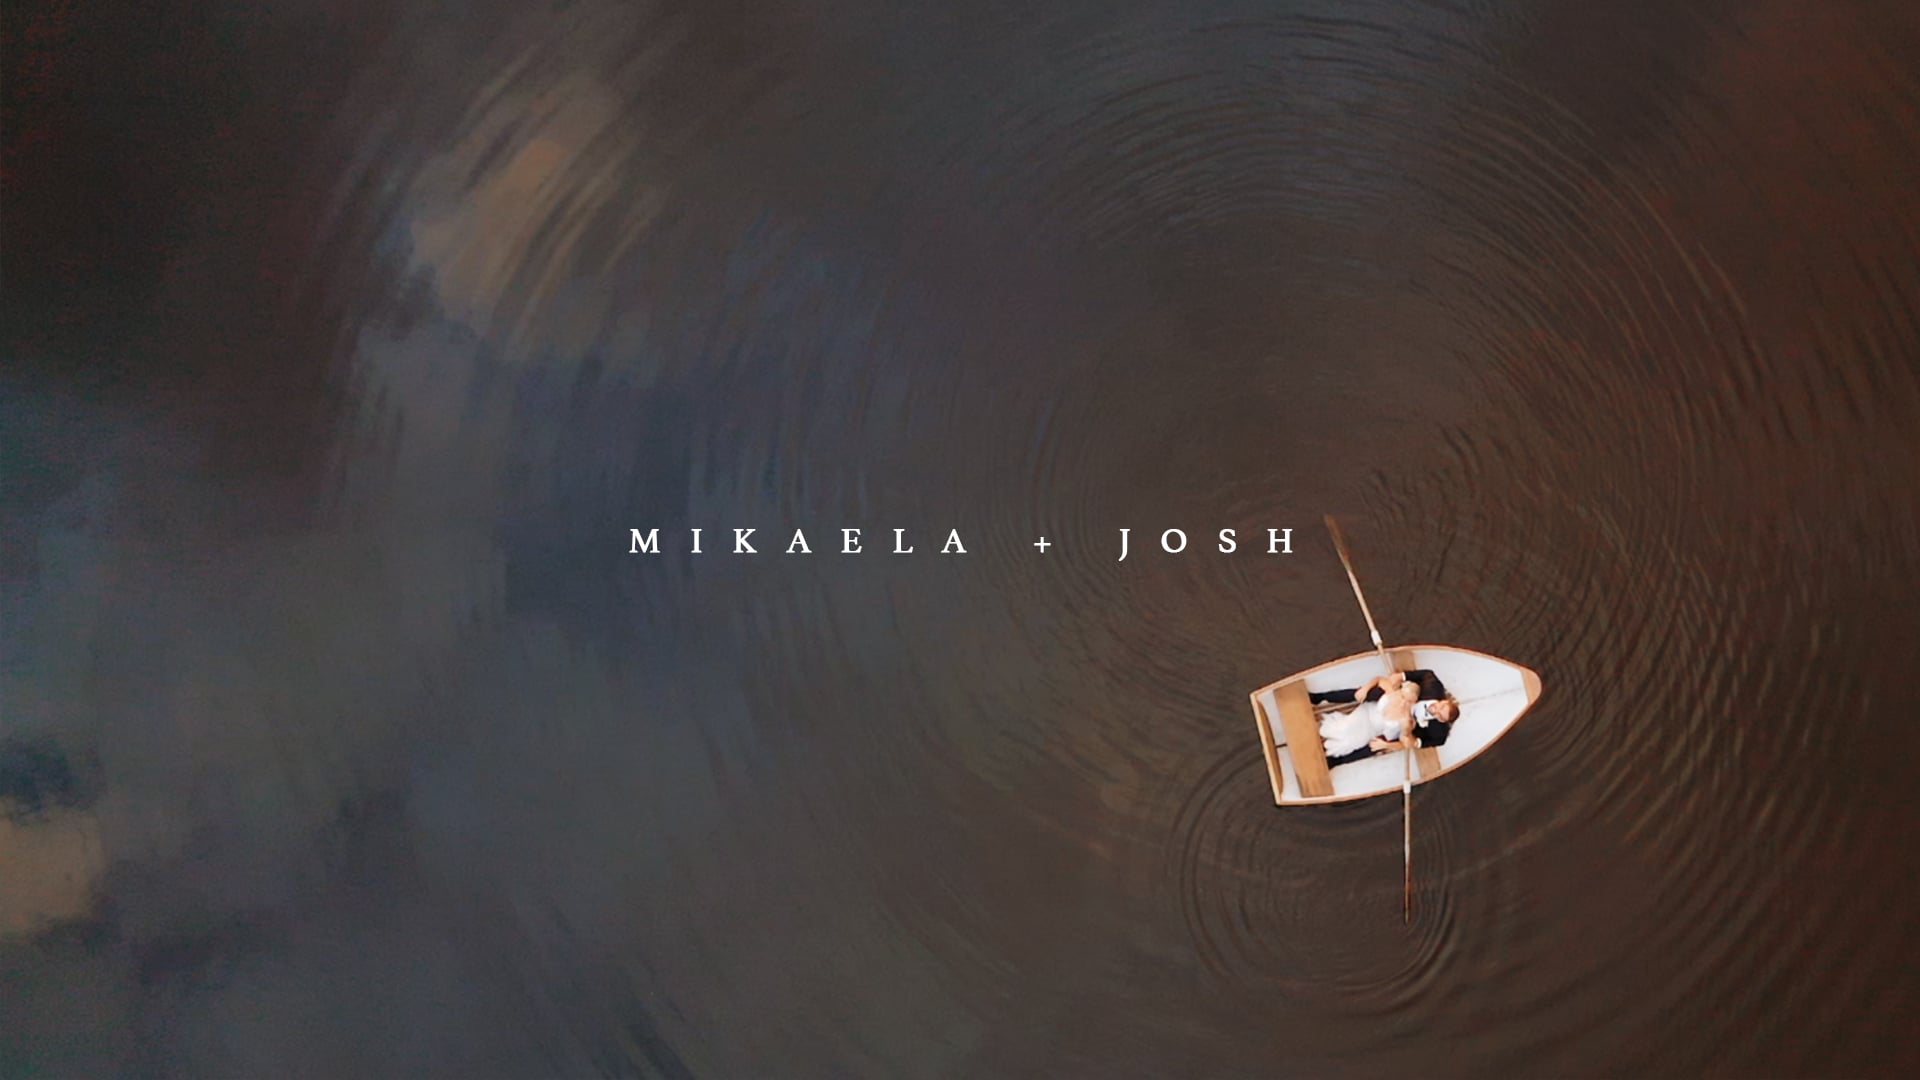 Mikaela + Josh | Sneak peek | Willow Farm.m4v